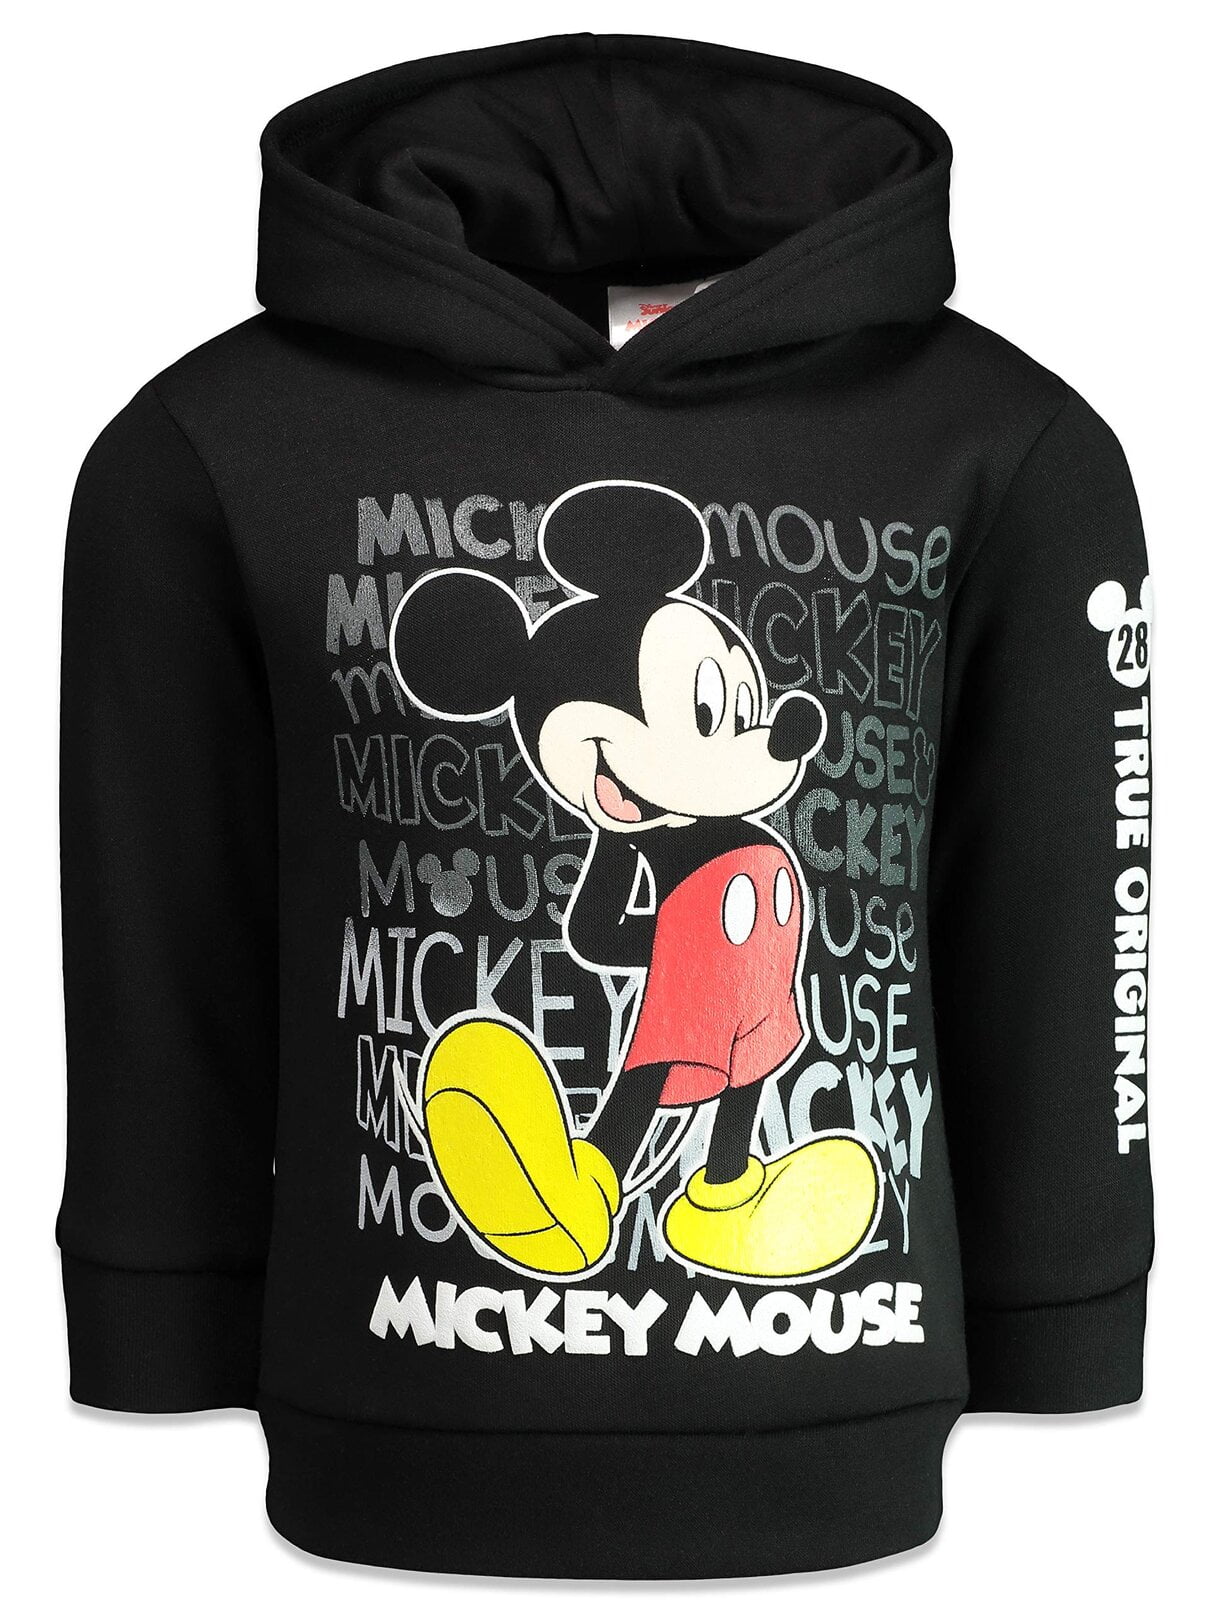 Disney Mickey Mouse Hoodie Cute And Happy Cartoon Character Disney World Kids And Adults Unisex Gift Hood Top Clothing Unisex Kids Clothing Hoodies & Sweatshirts Hoodies 